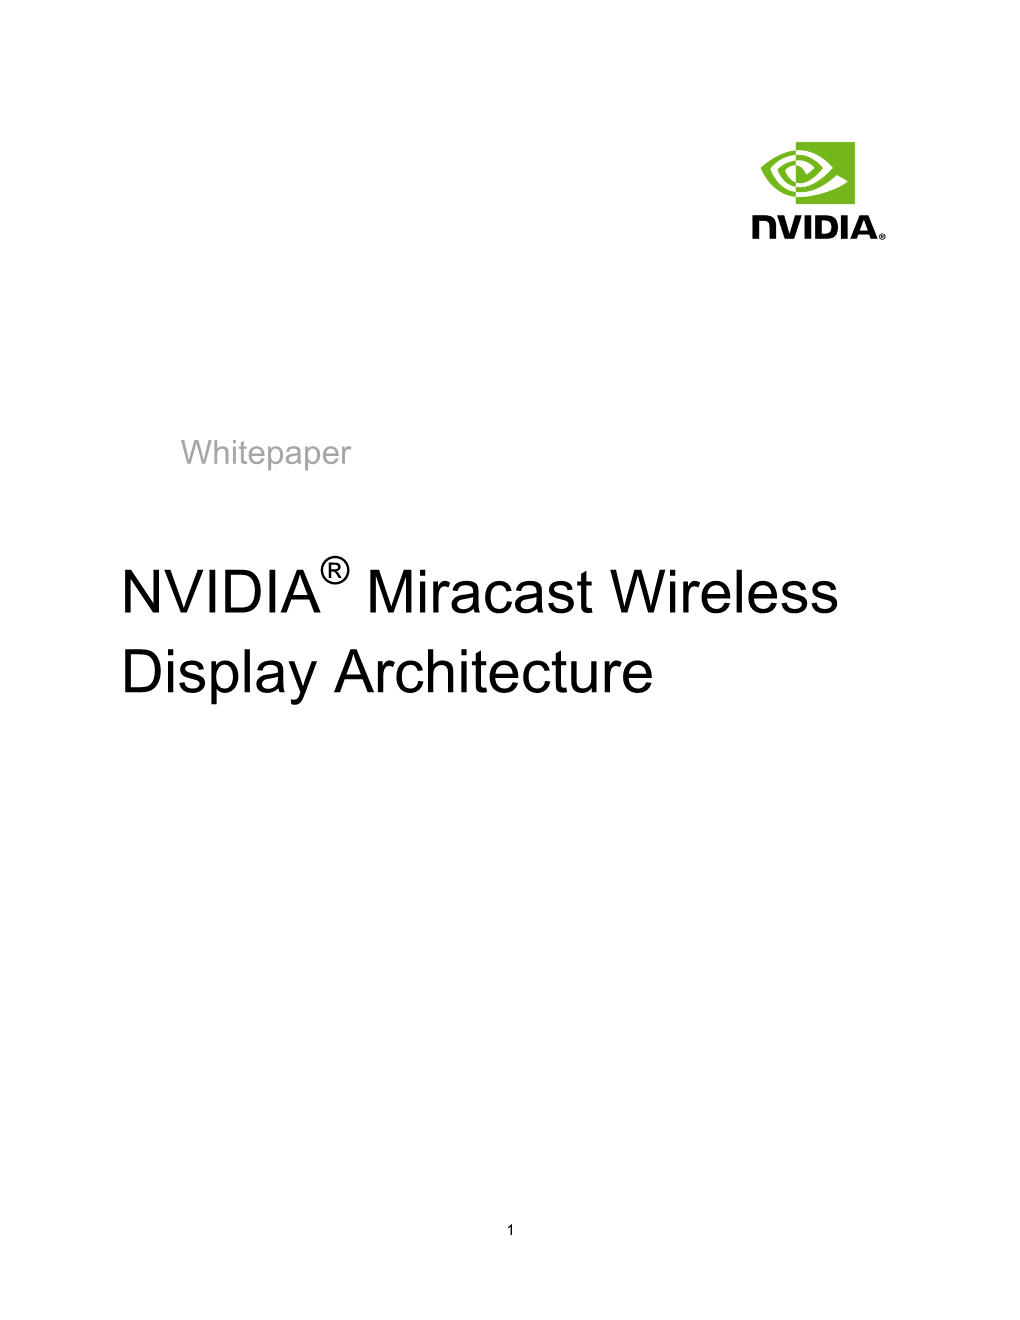 NVIDIA Miracast Wireless Display Architecture